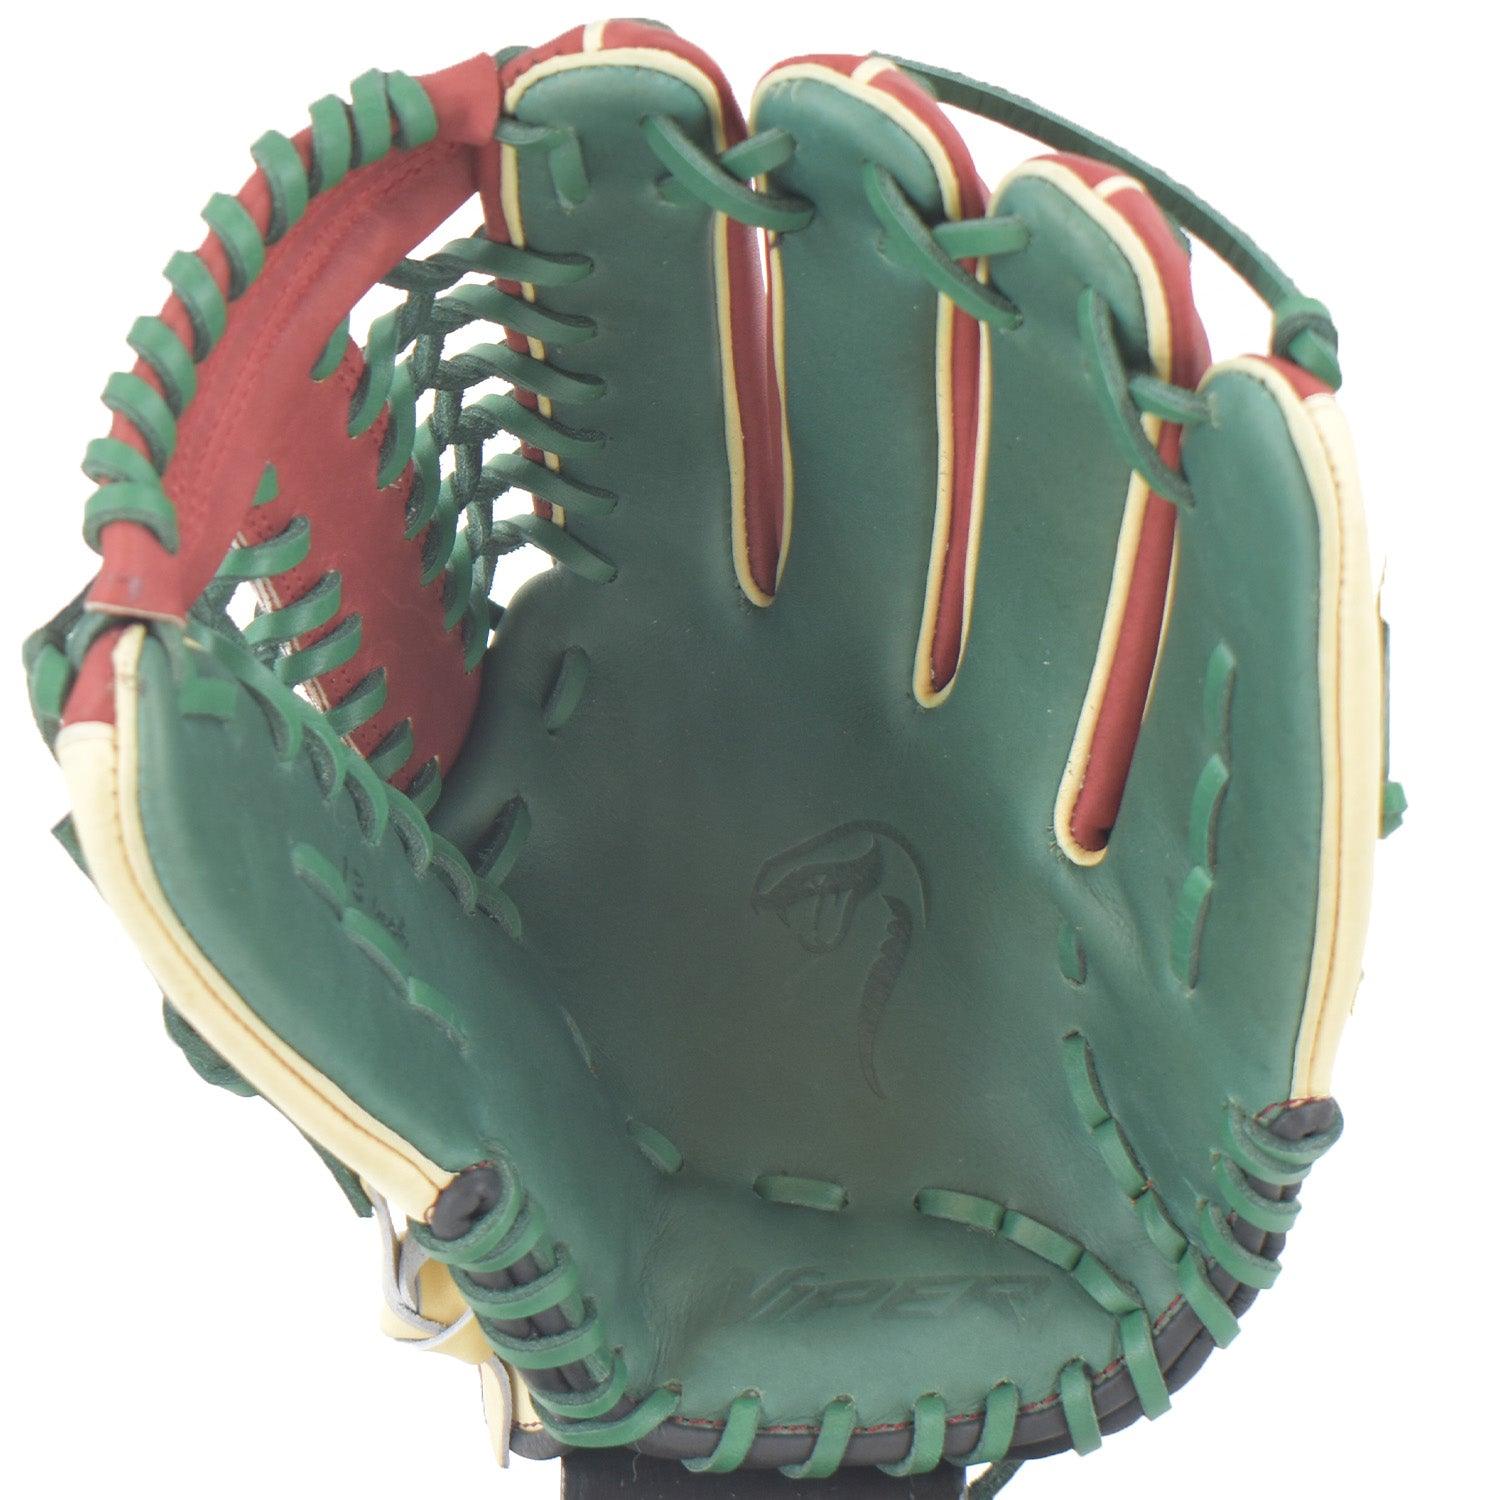 Viper Japanese Kip Leather Slowpitch Softball Fielding Glove Carmel Green Tan - Smash It Sports